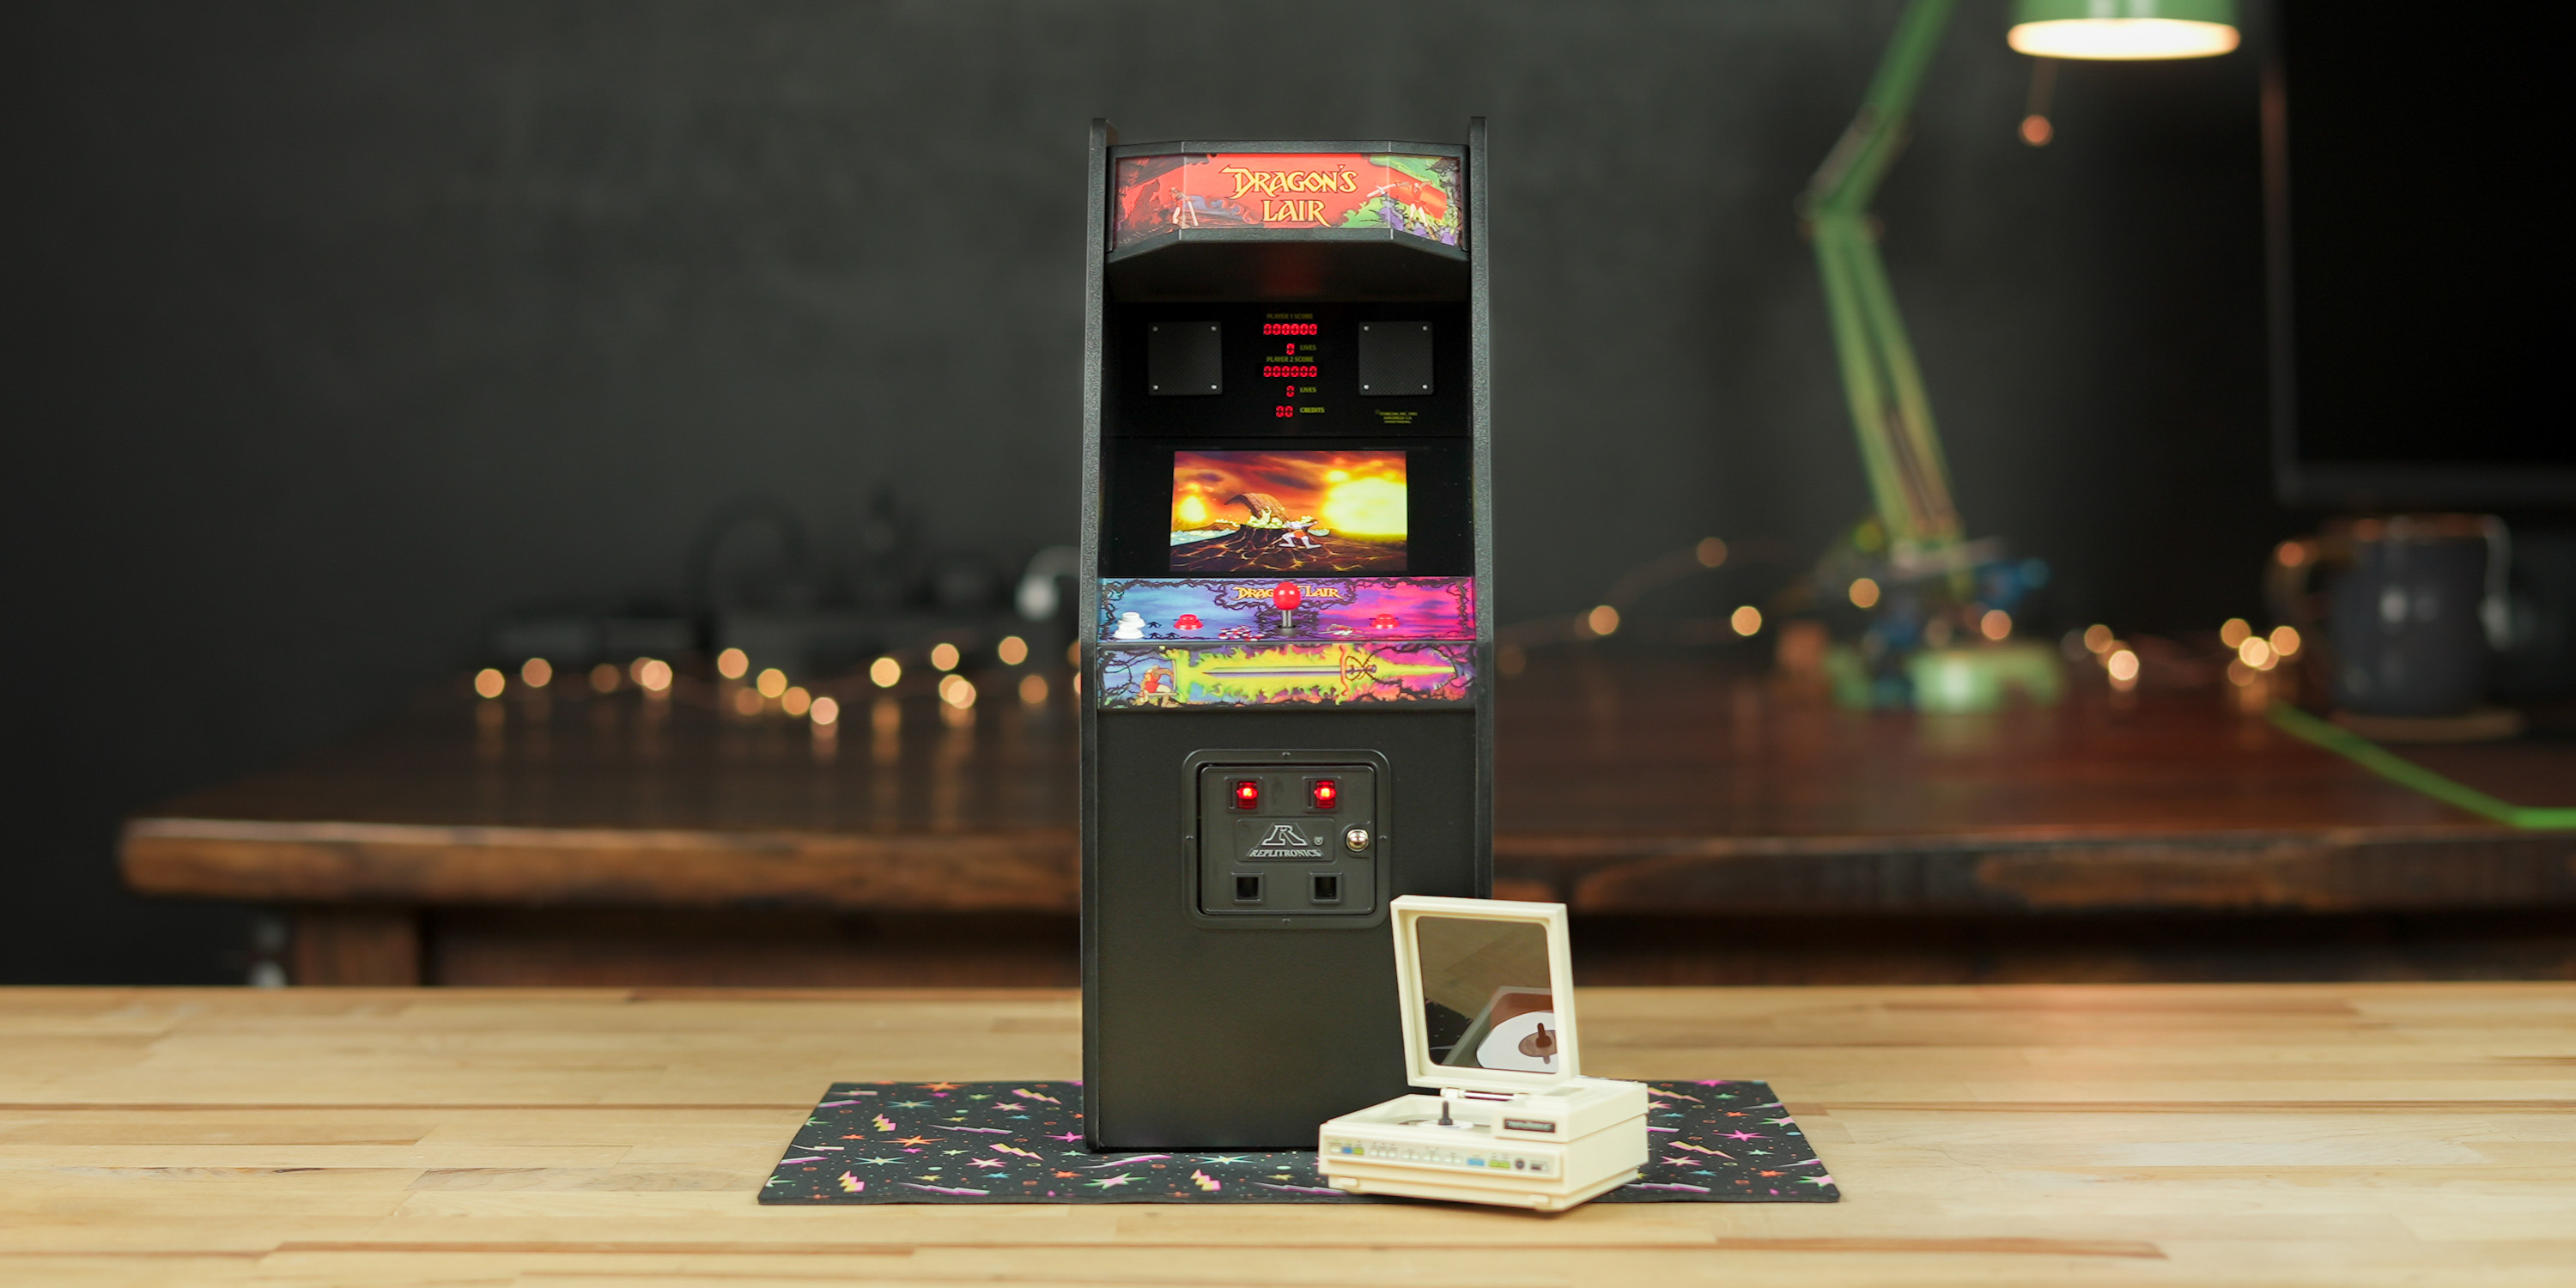 Dragon S Lair X Replicade Review Another Premium Collectible Mini Arcade